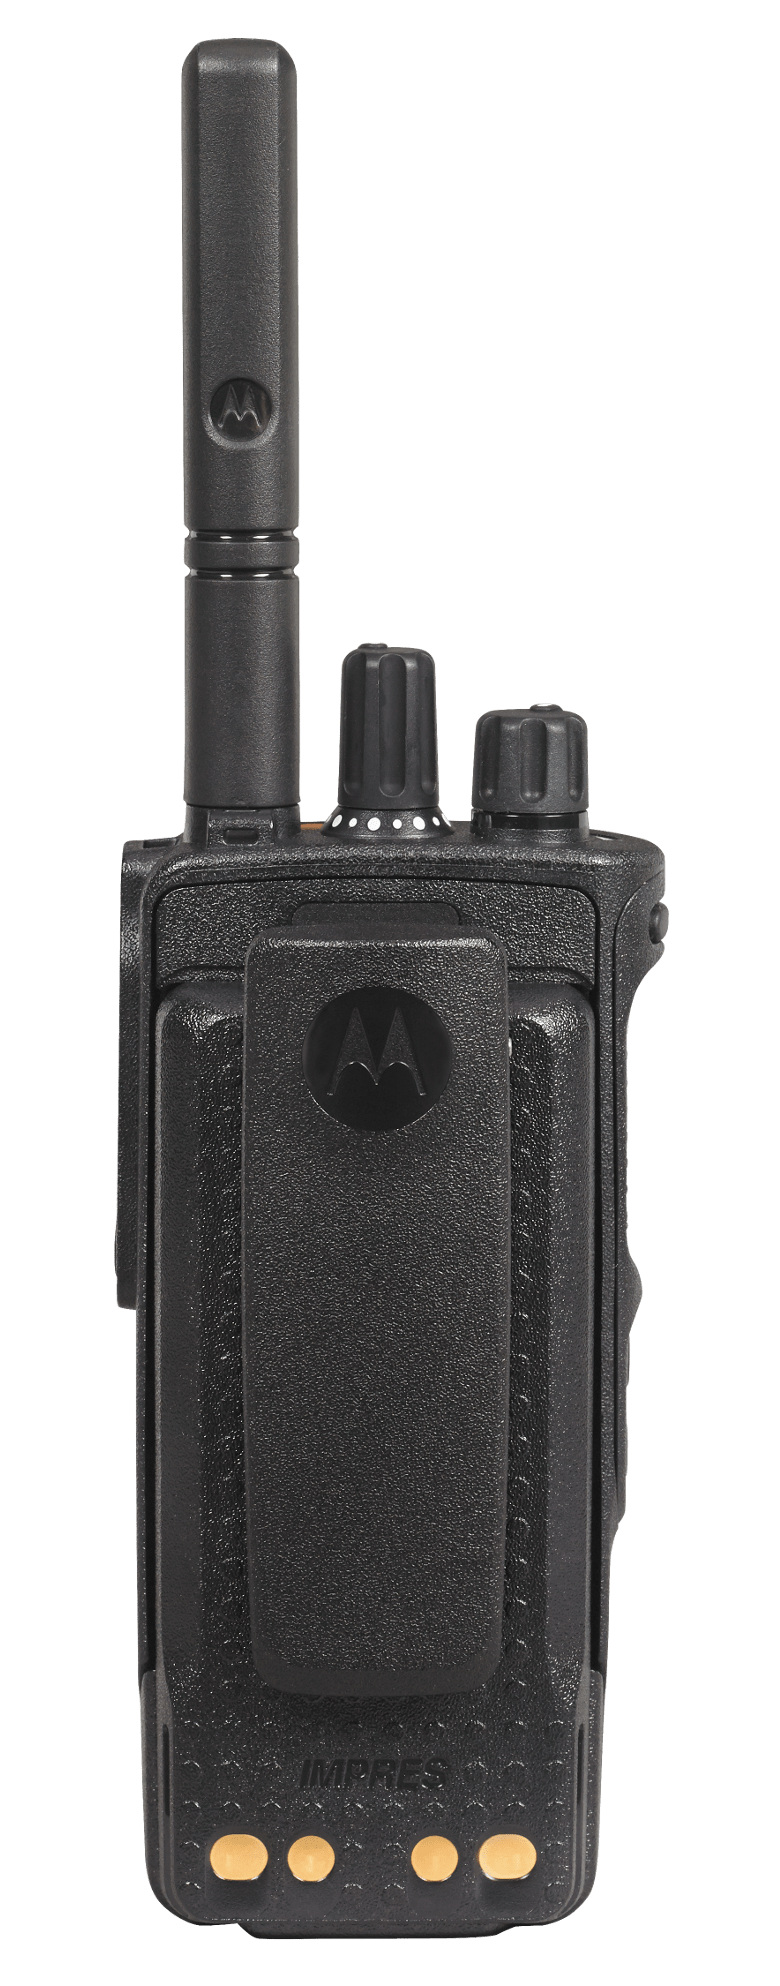 Motorola DP4801E VHF Portable DMR Radio